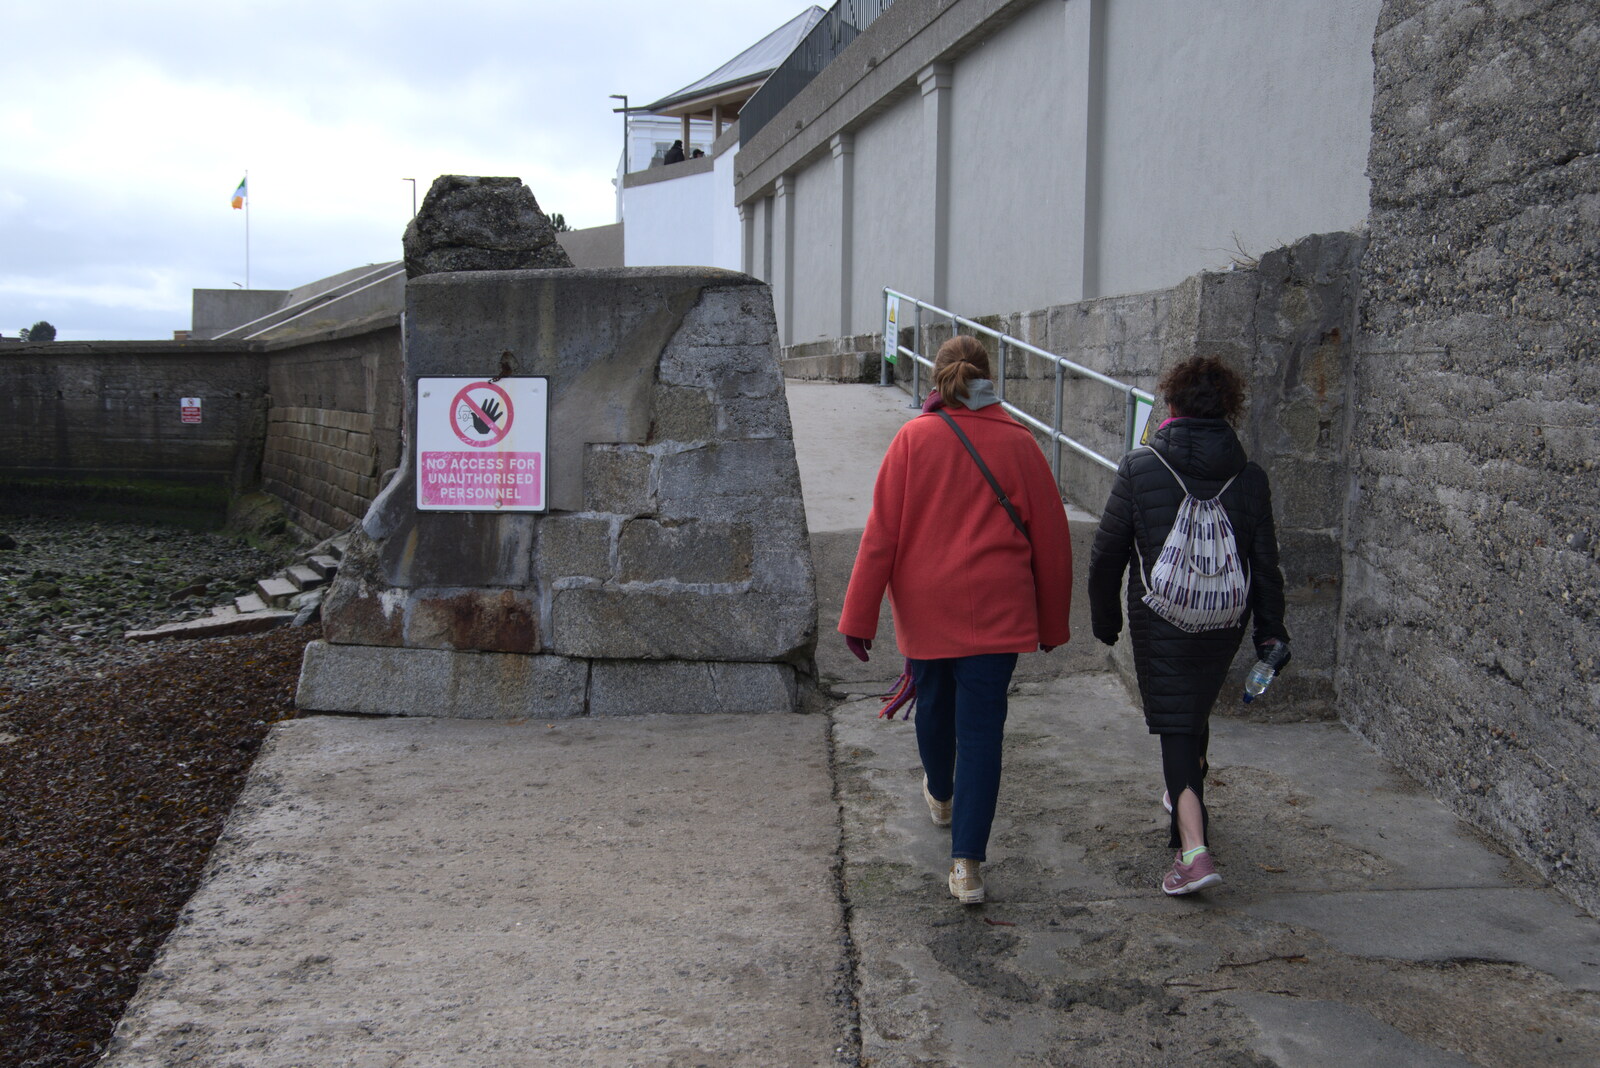 The End of the Breffni, Blackrock, Dublin - 18th February 2023: Isobel and Evelyn roam around